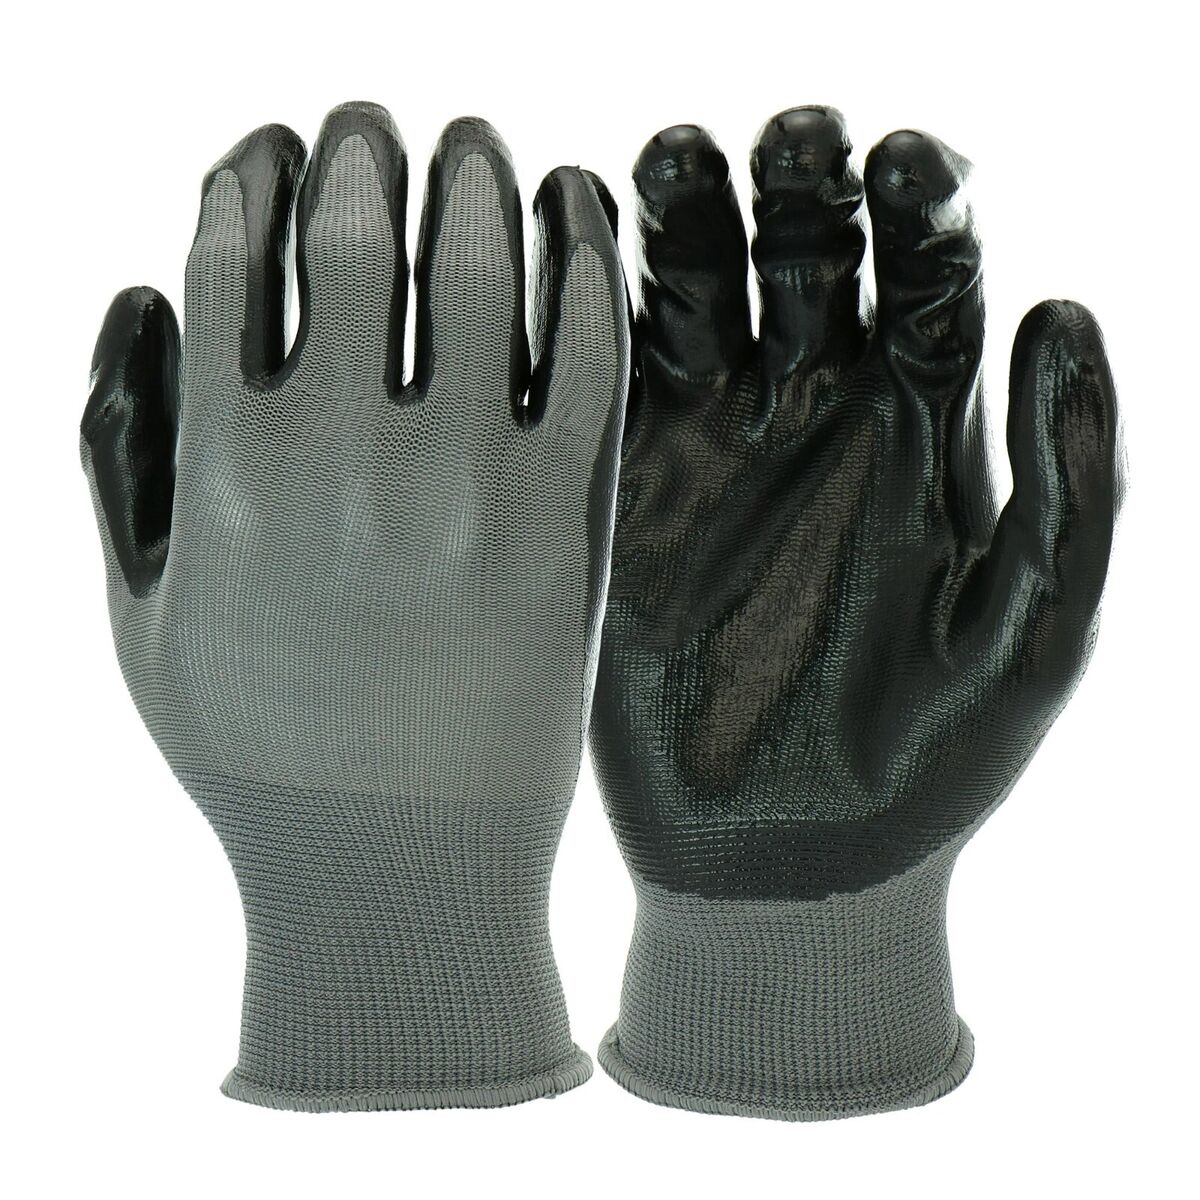 Hyper Tough 3 Pair Nitrile Work Gloves for Men Large Black Safety Coated  Grip